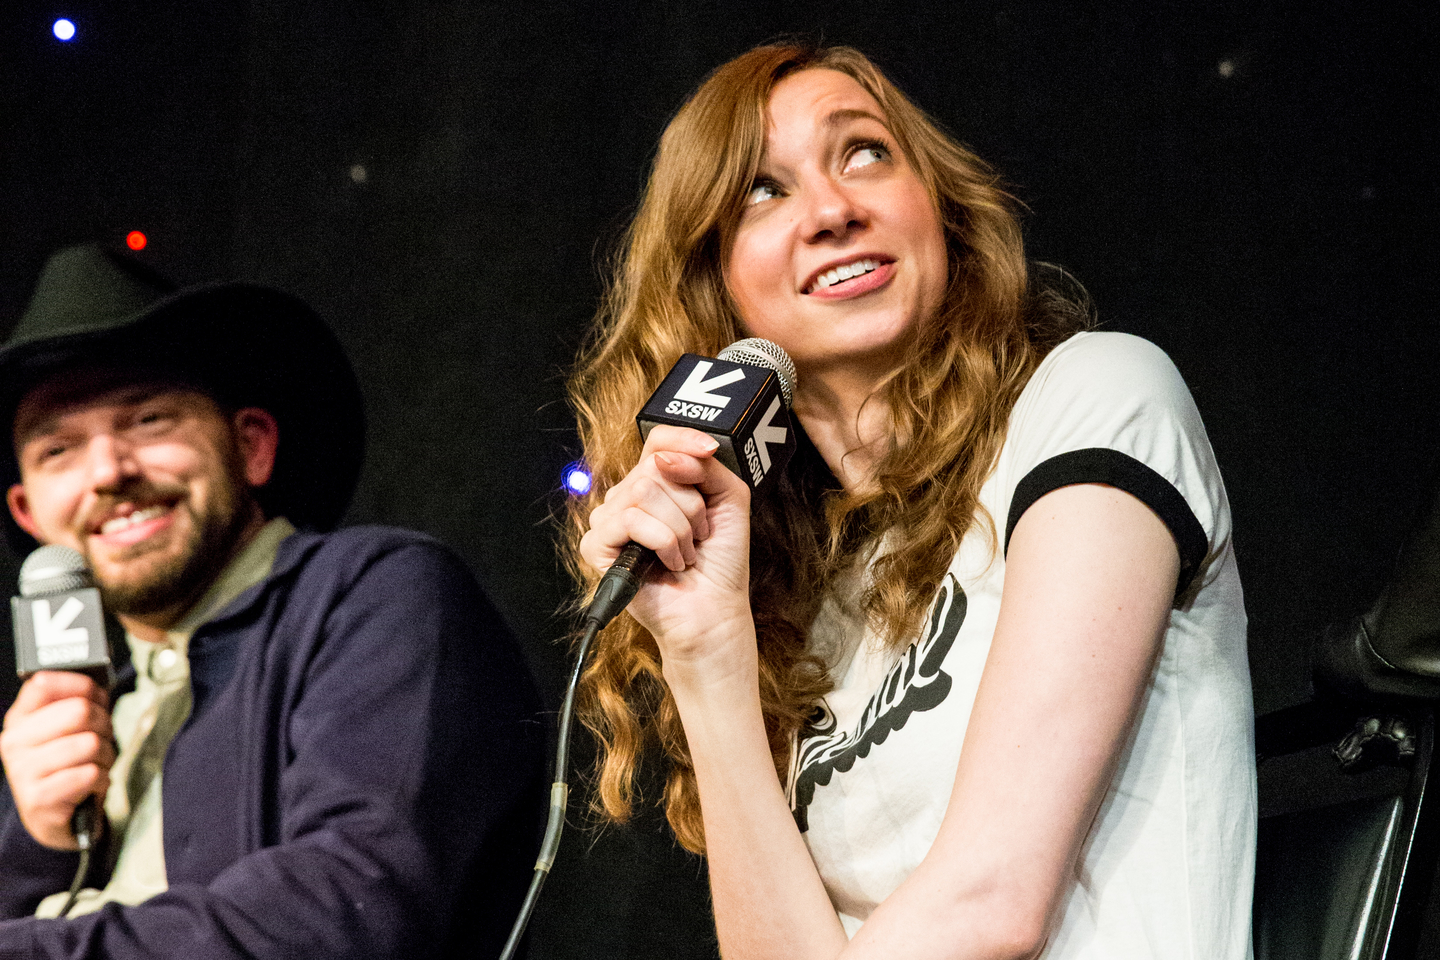 Lauren Lapkus at Comedy Bang! Bang! Photo by Alexa Gonzalez Wagner